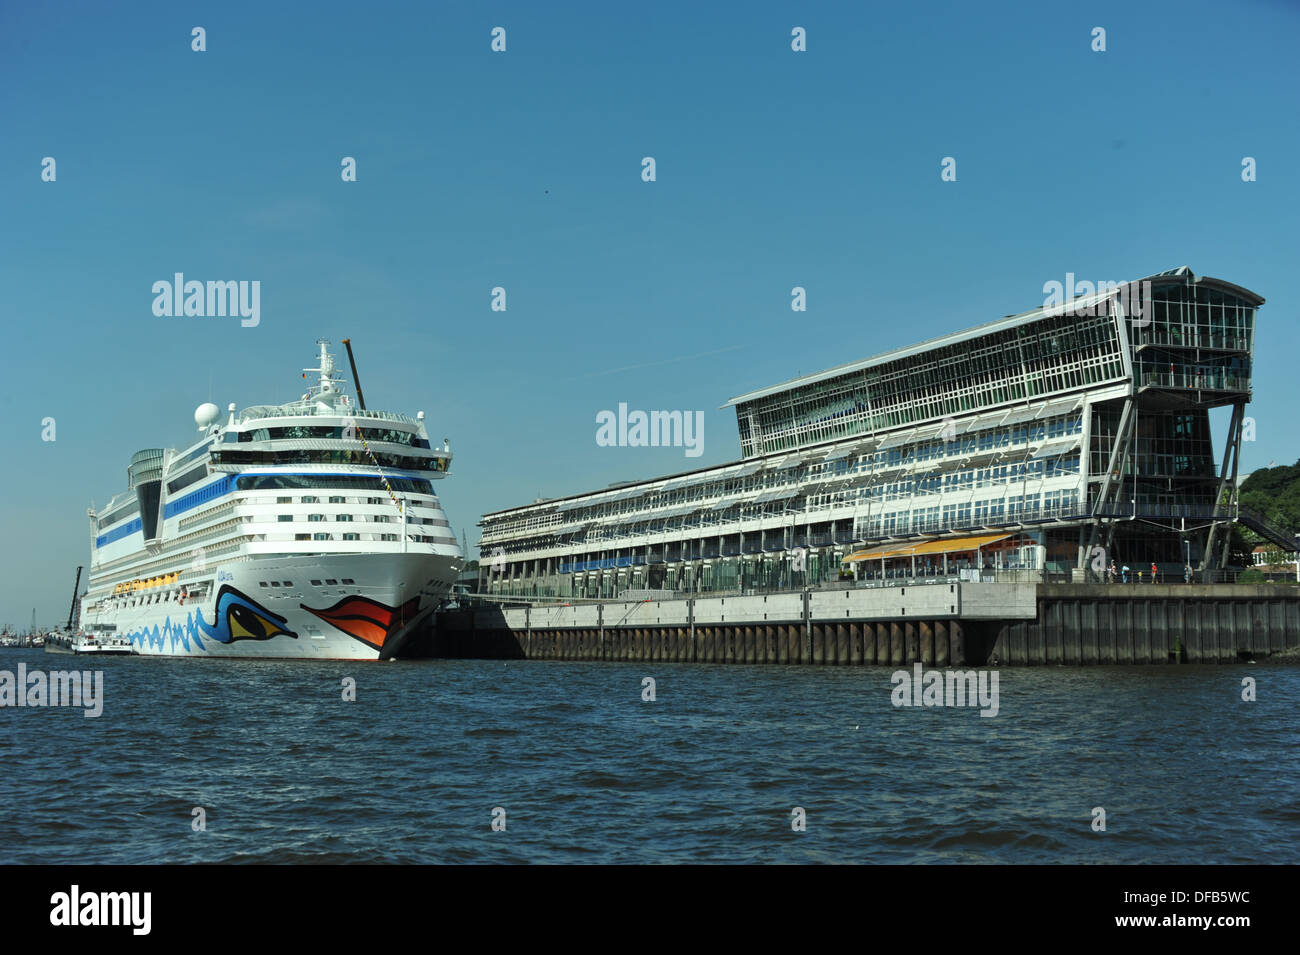 Cruise Ship AIDA in the Port of Hamburg, Germany. Stock Photo